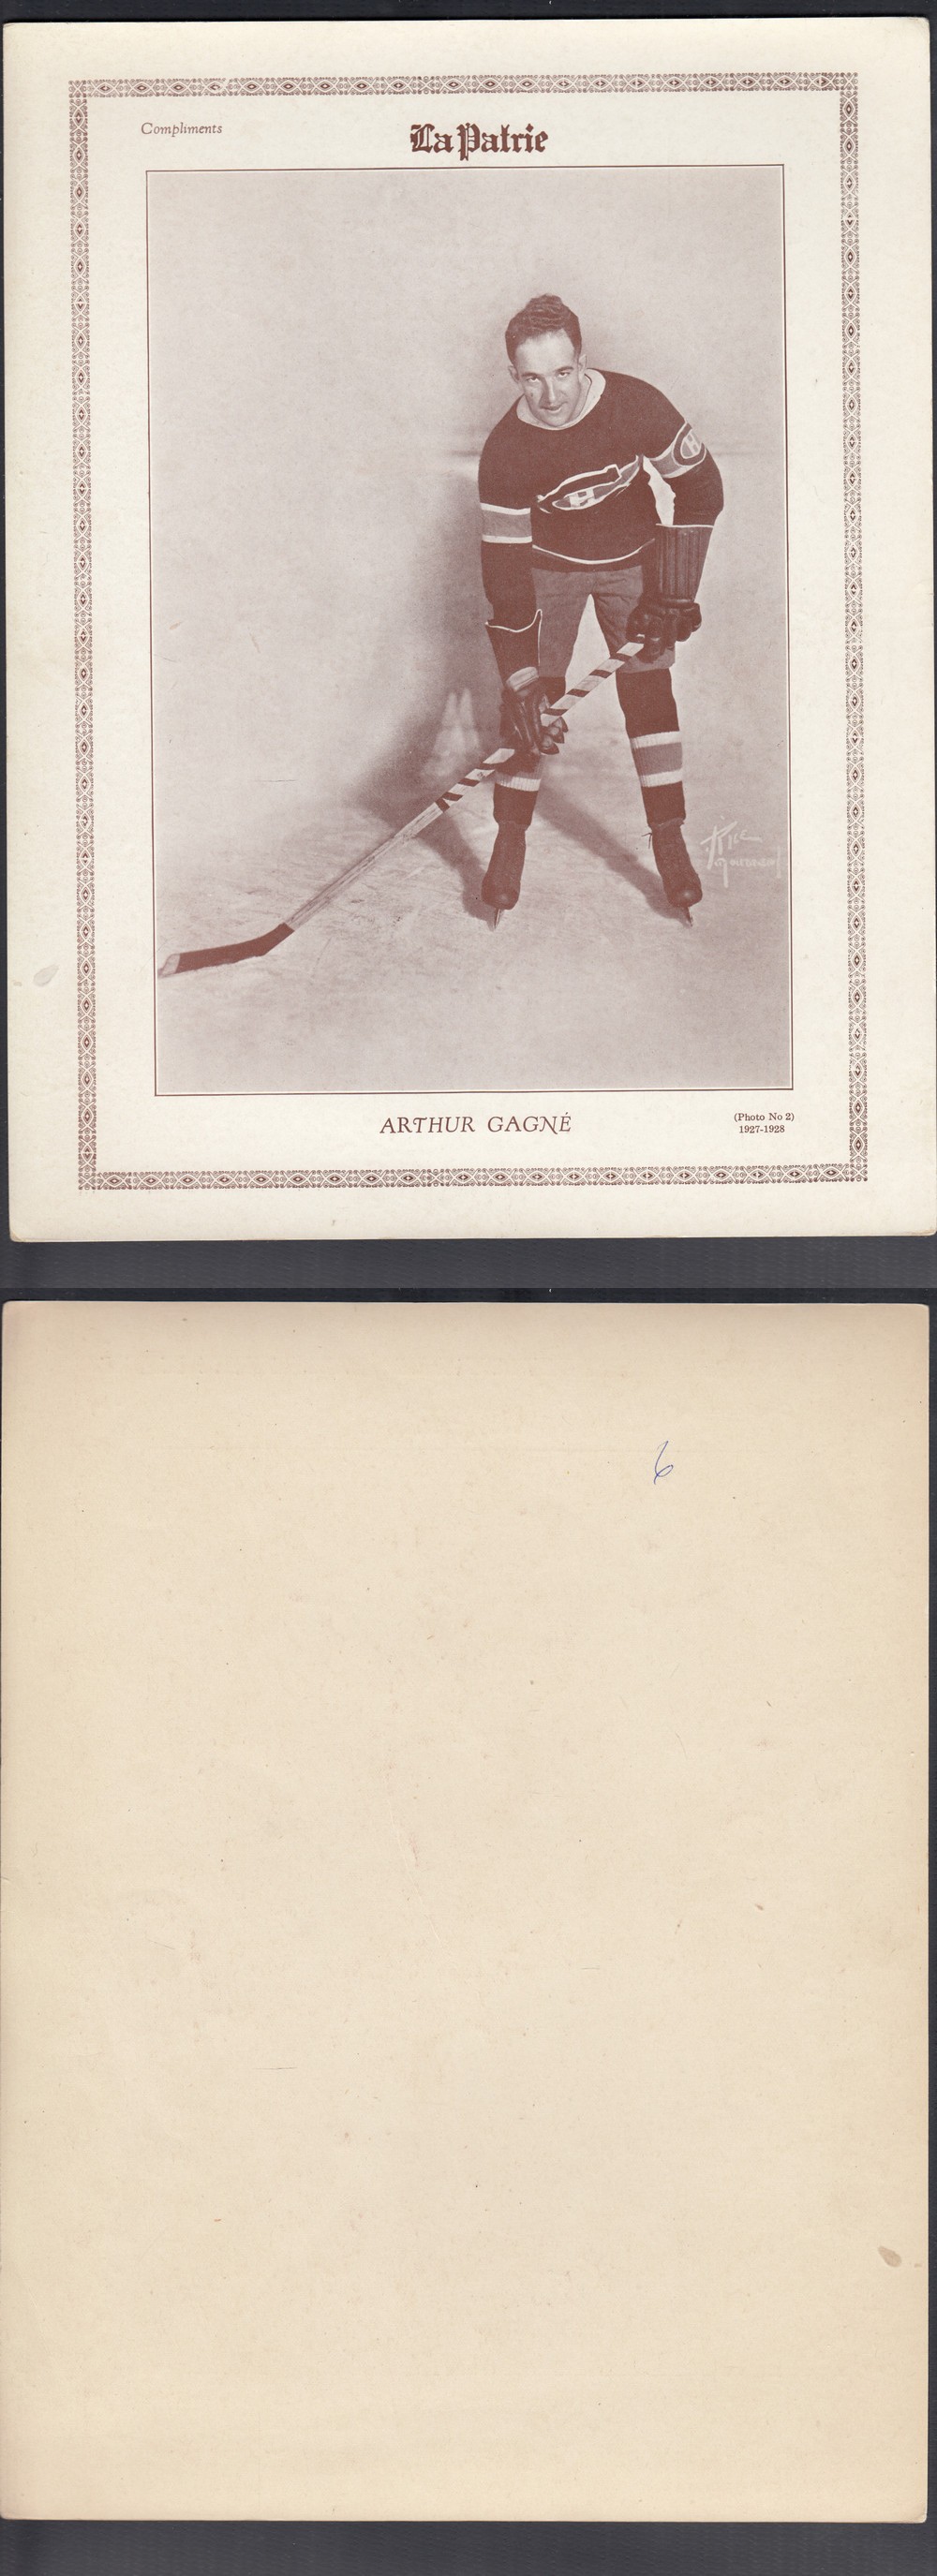 1927-28 LA PATRIE PHOTO #2 A. GAGNE photo